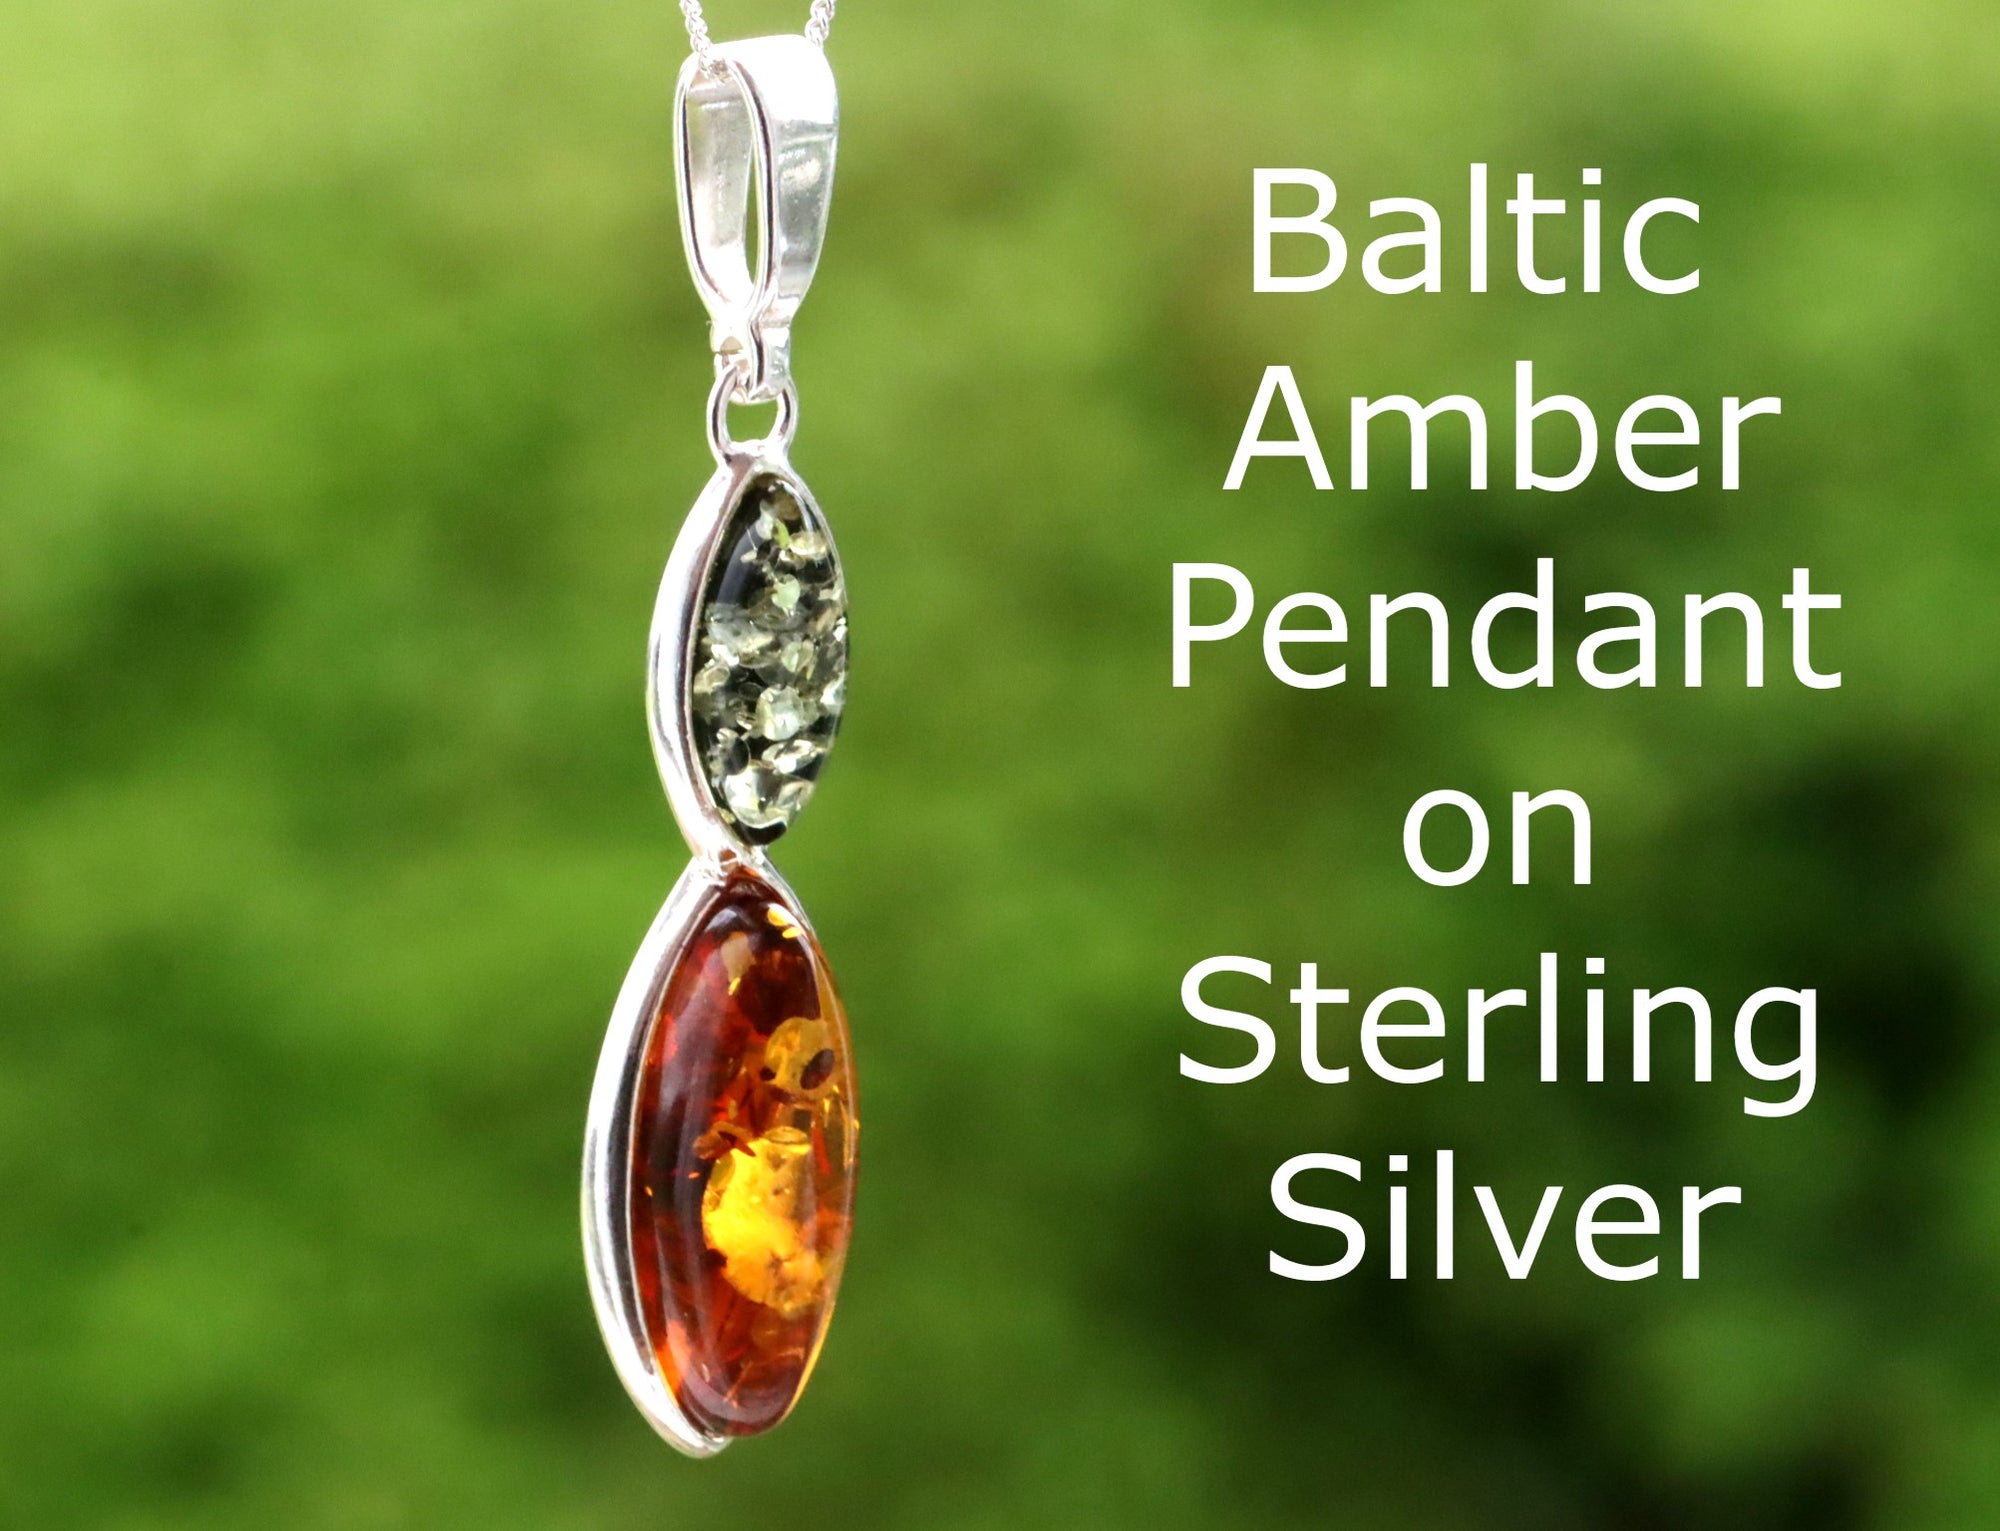 Honey and Green Baltic Amber Pendant